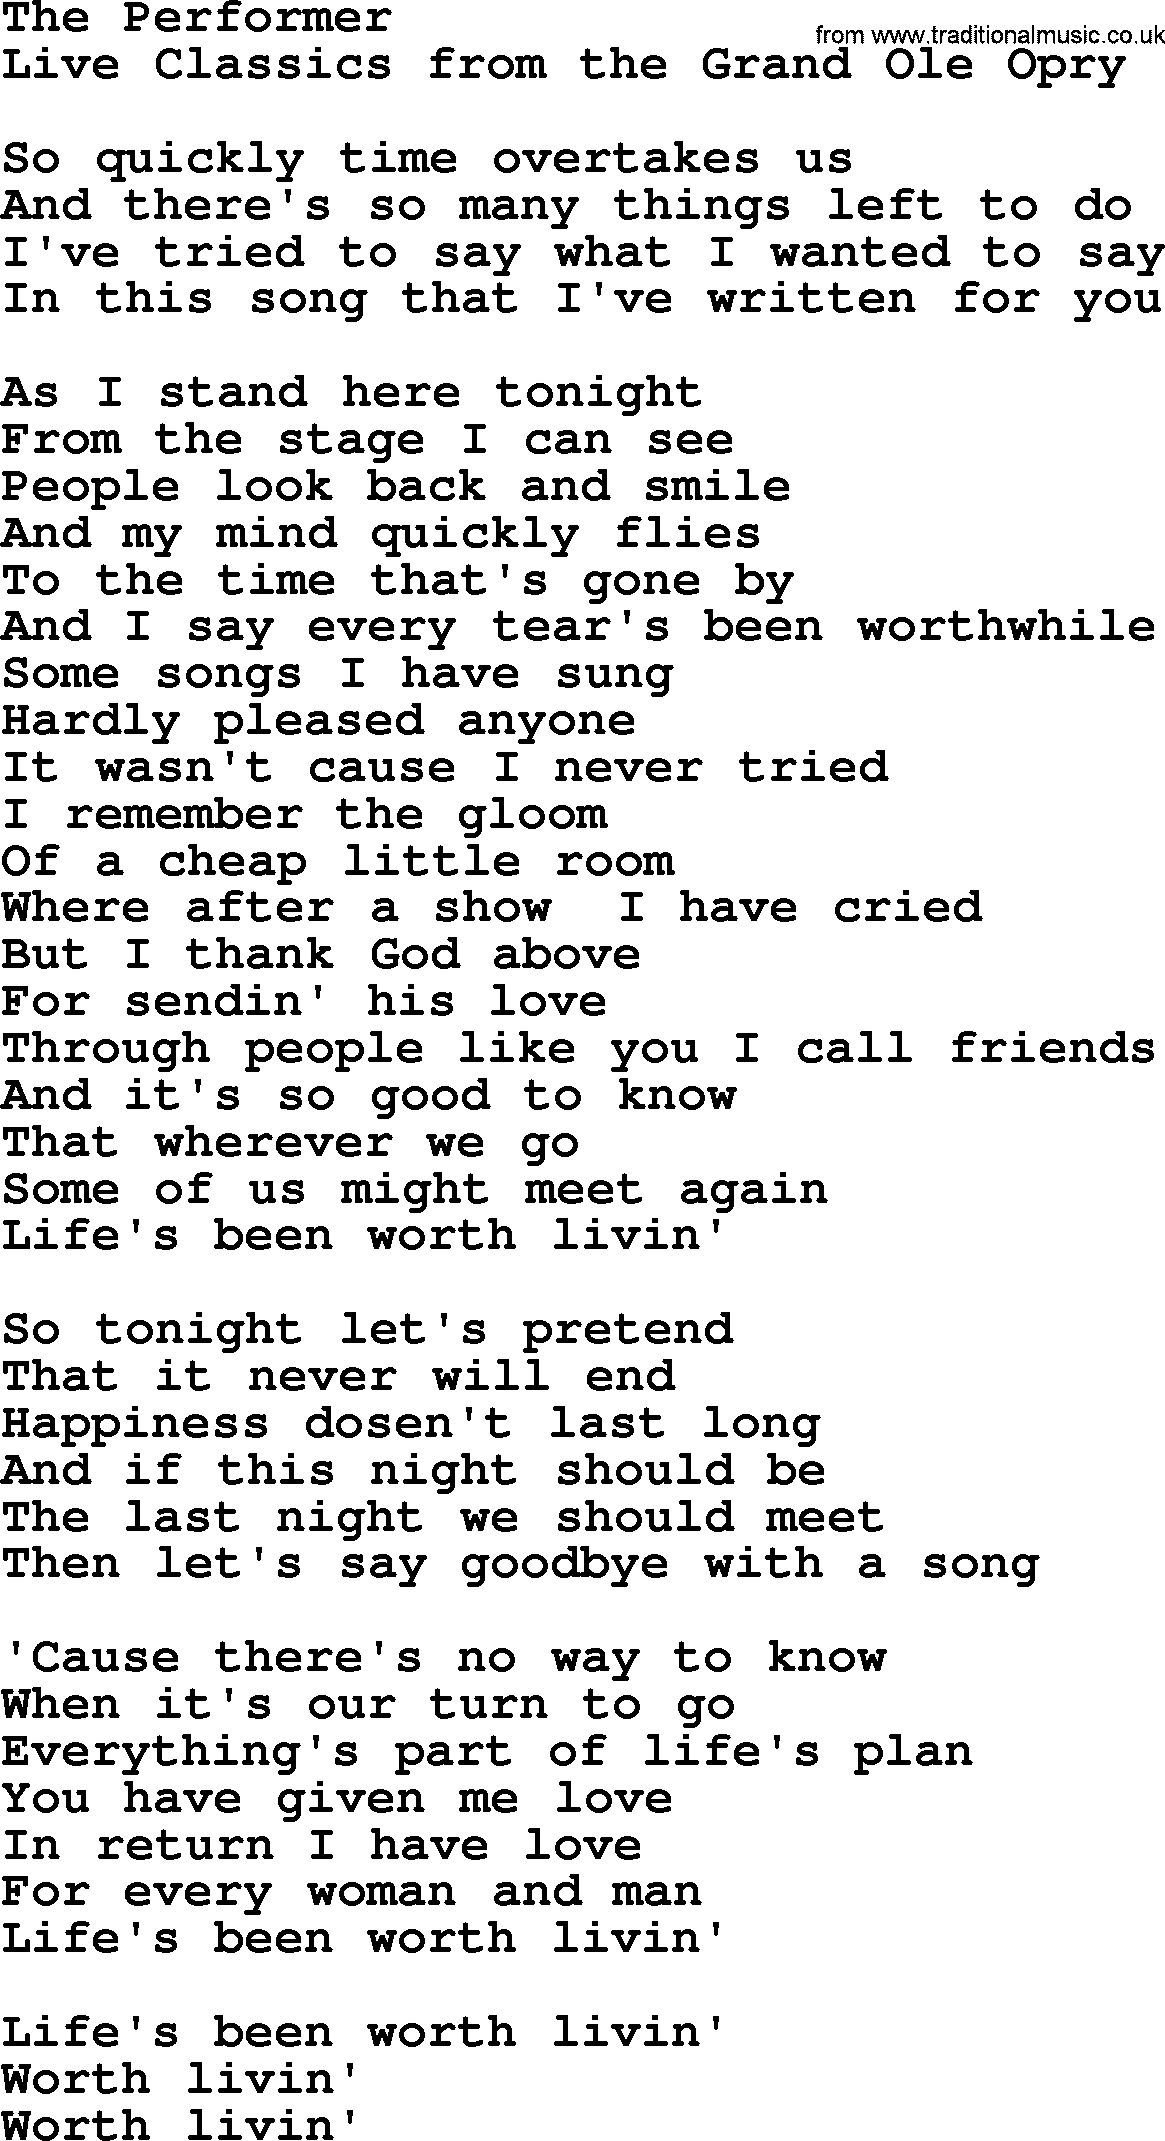 Marty Robbins song: The Performer, lyrics